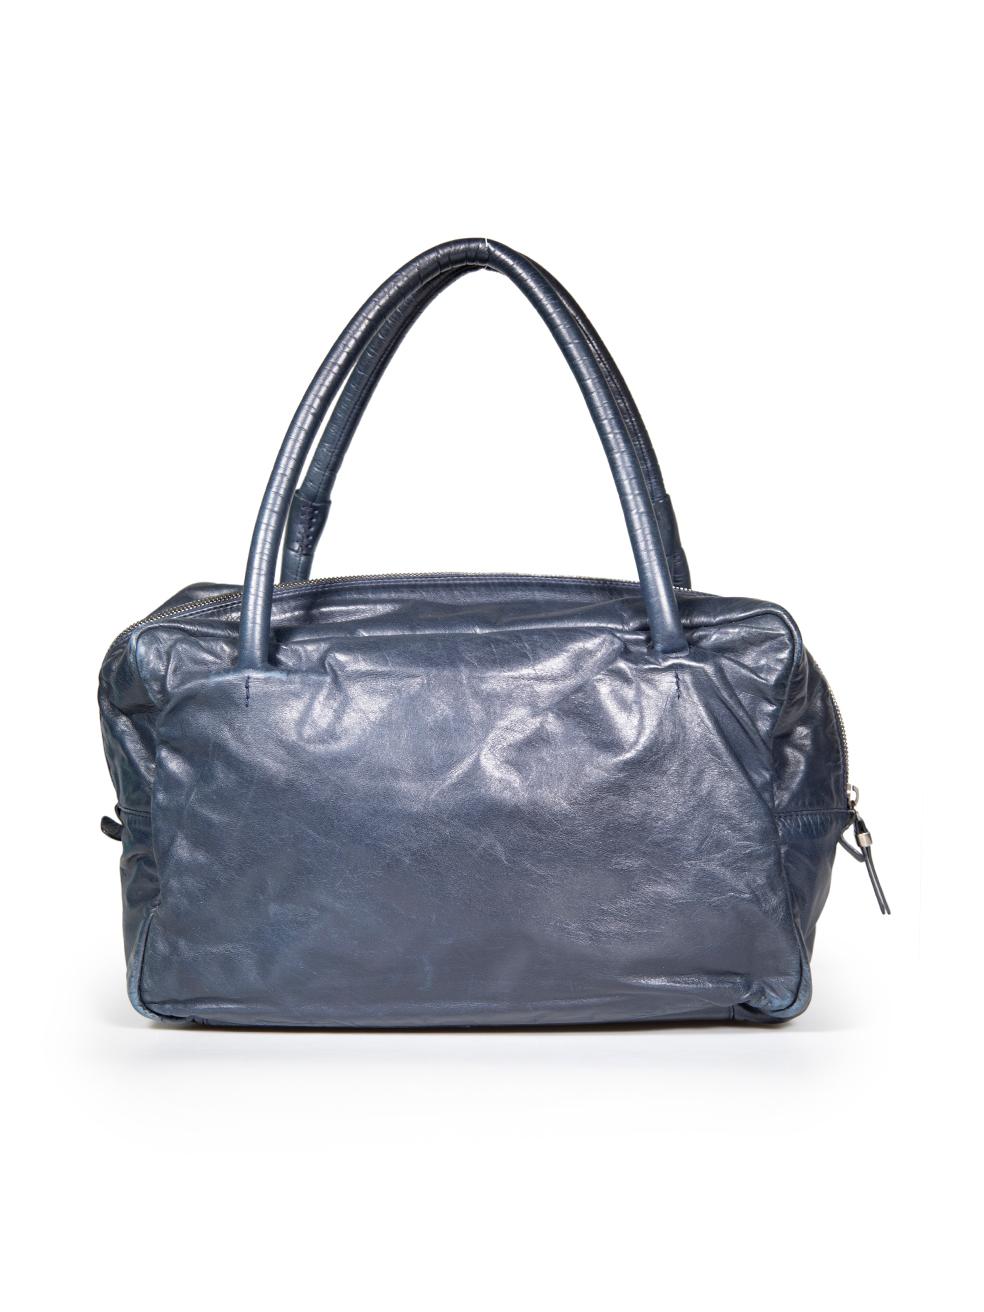 Jil Sander Navy Leather Shoulder Bag In Good Condition For Sale In London, GB